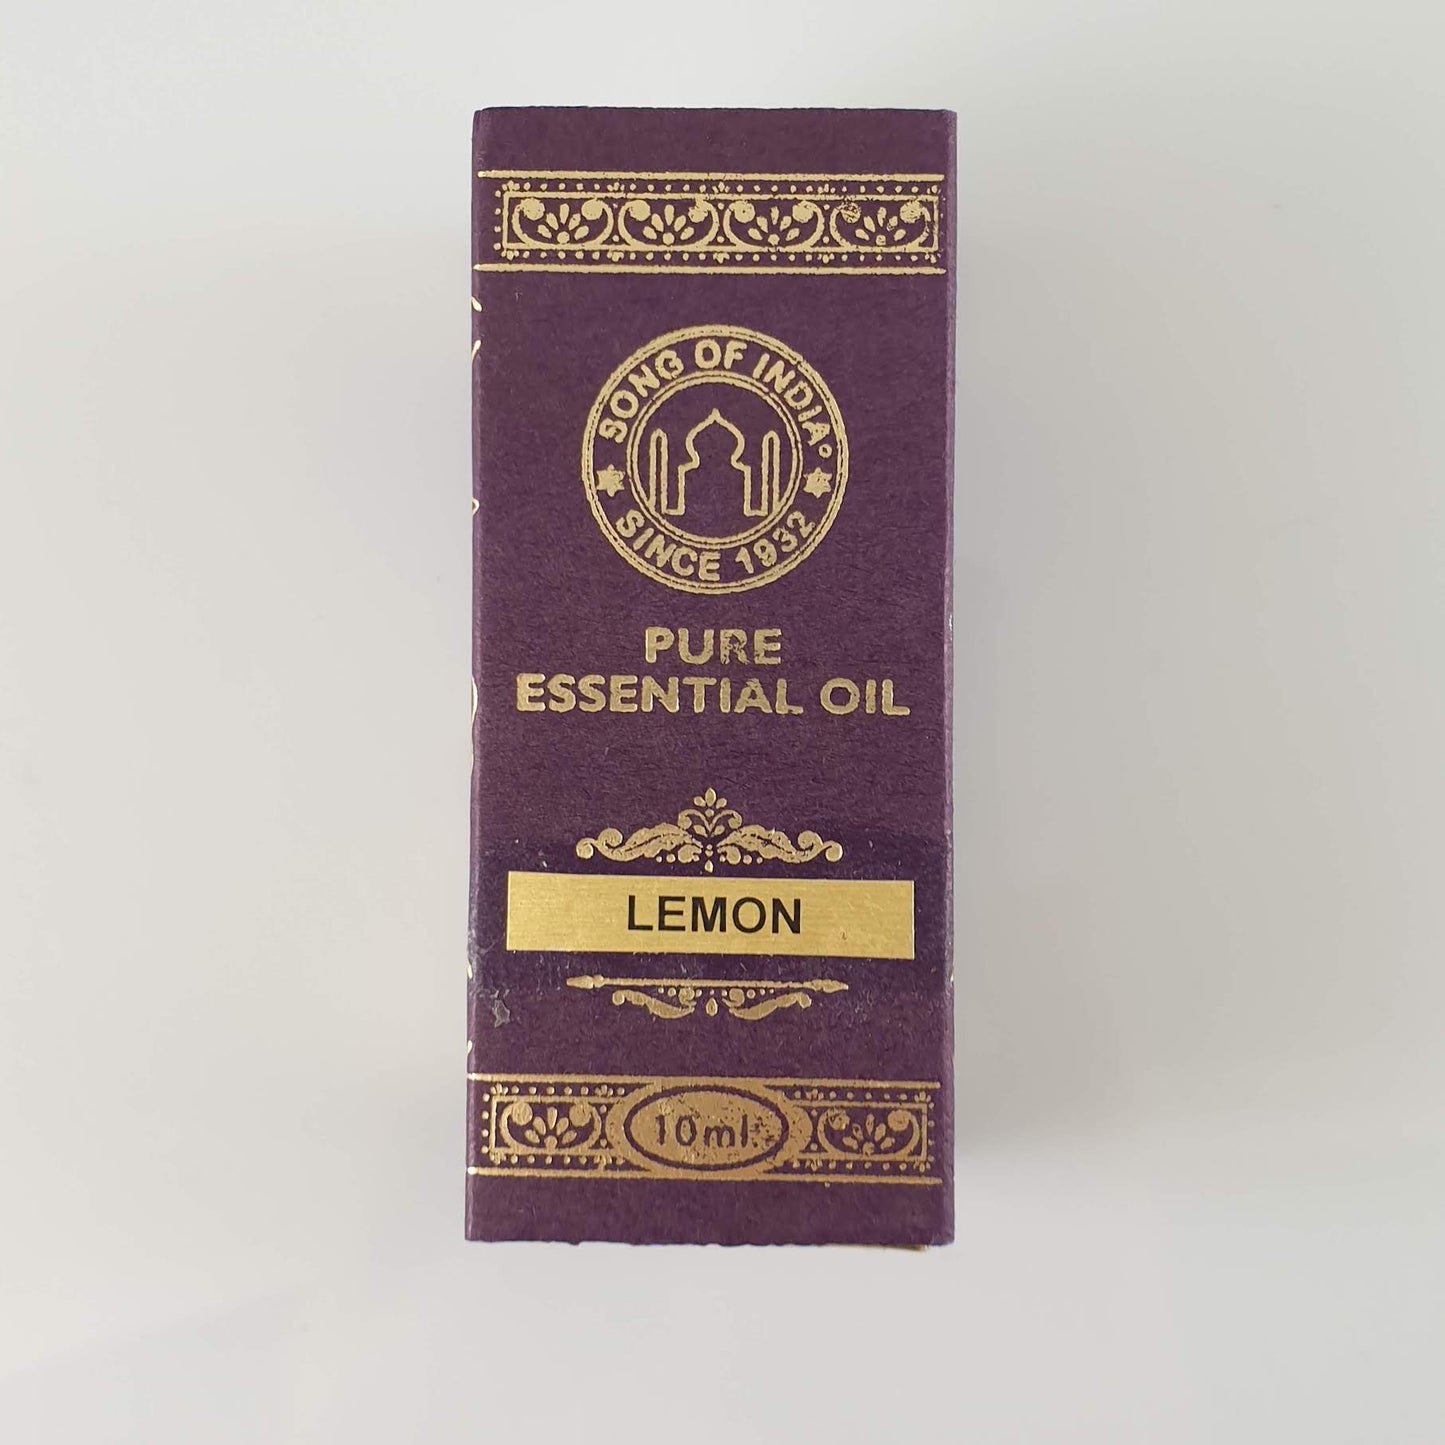 Song of India Essential Oil - Lemon 10ml - Rivendell Shop